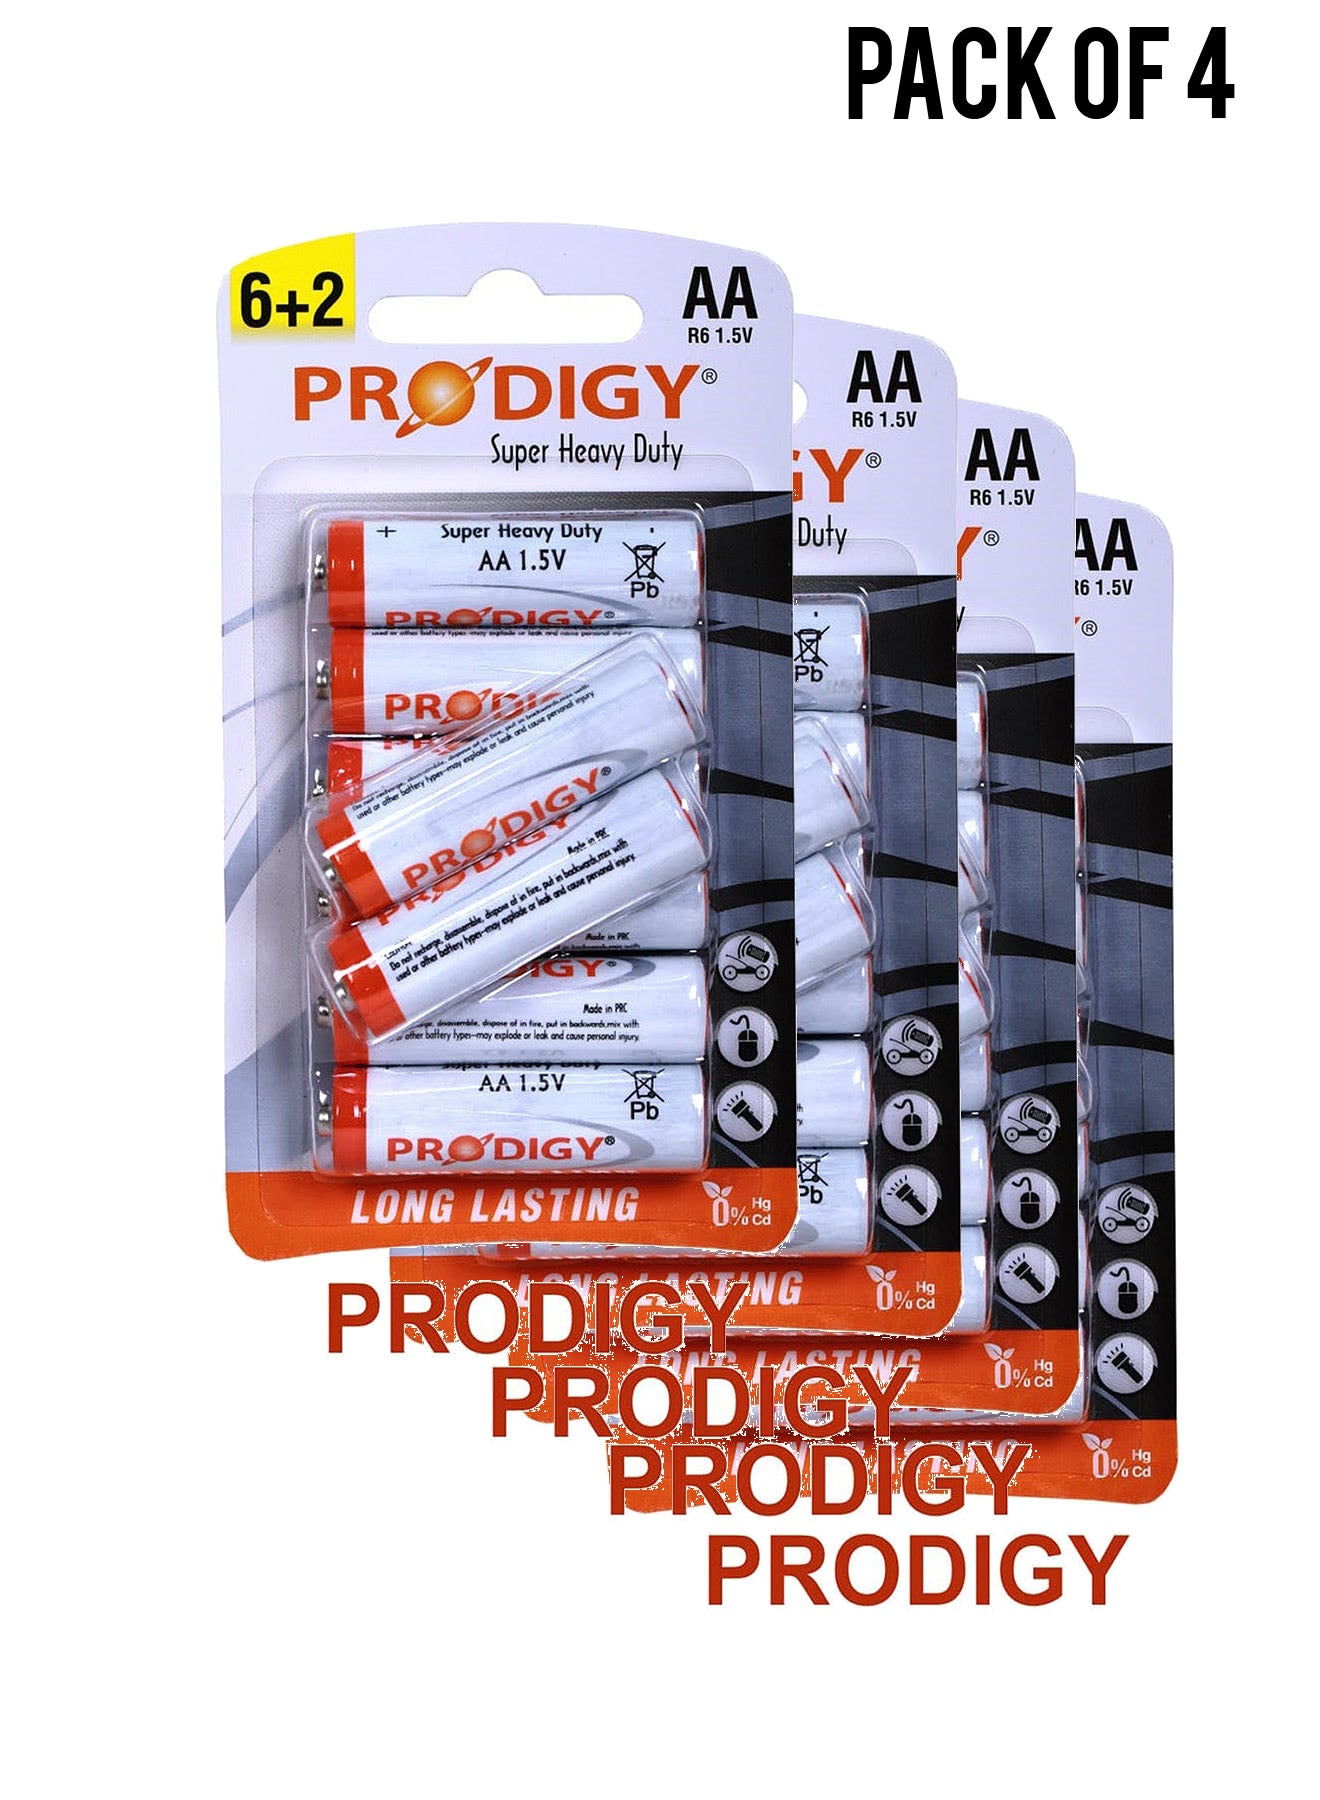 Prodigy Super Heavy Duty R6PVC 15V AA62 Value Pack of 4 